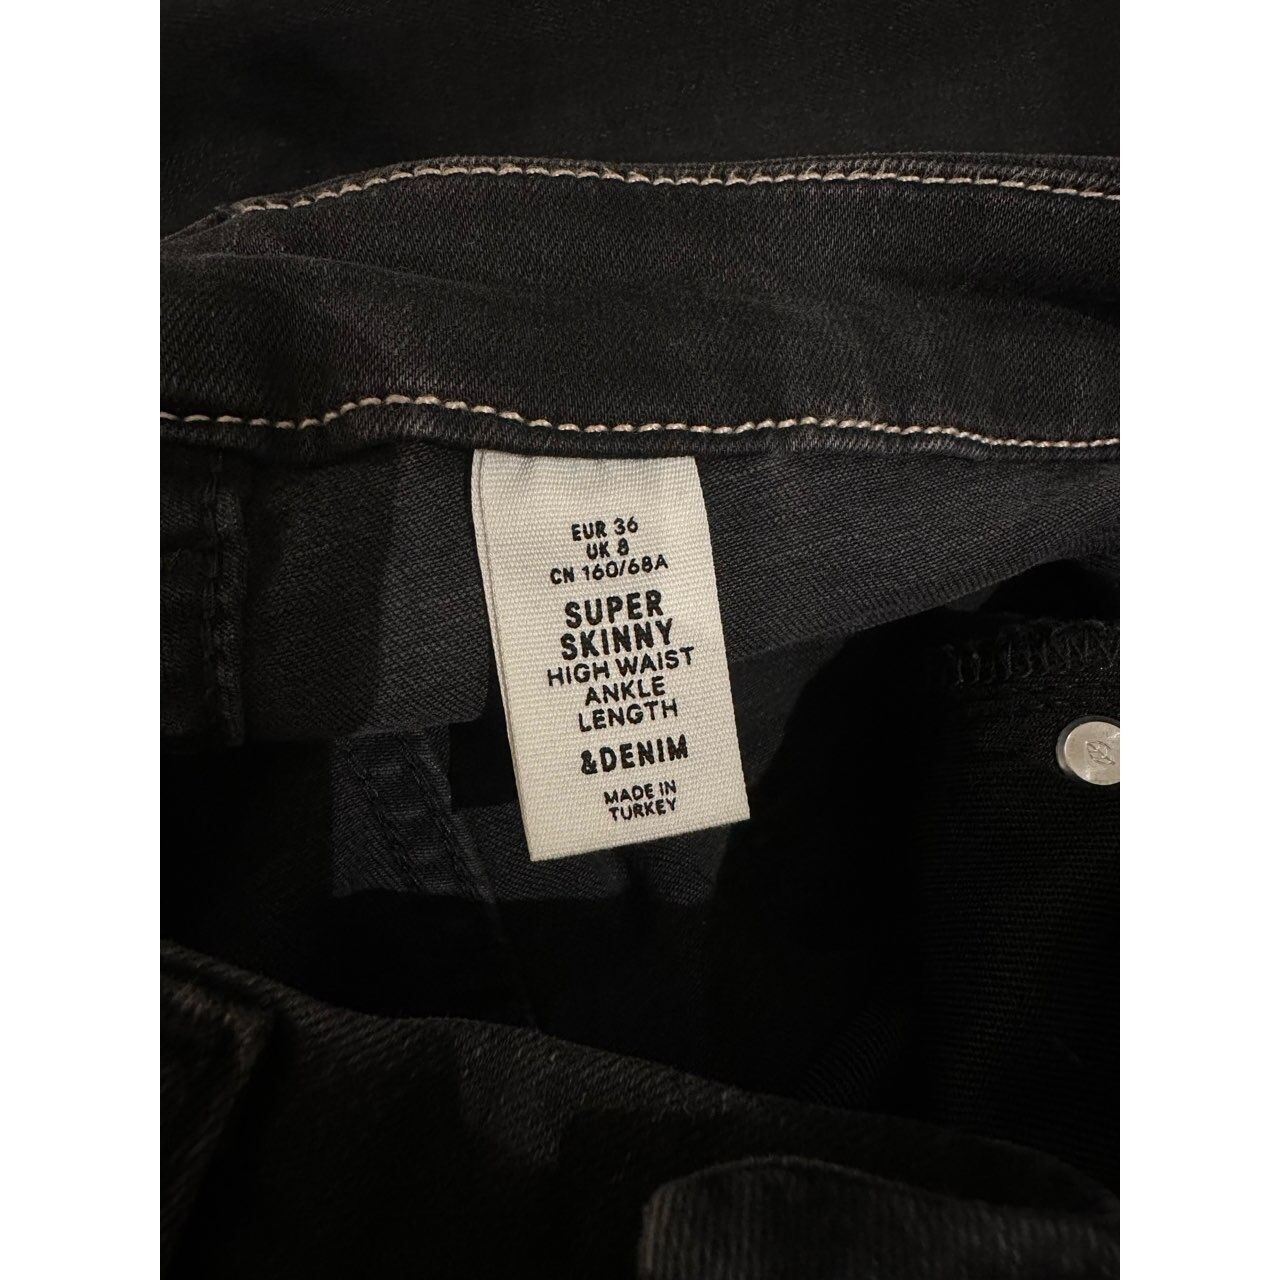 H&M Black Washed High Waist Jeans Long Pants